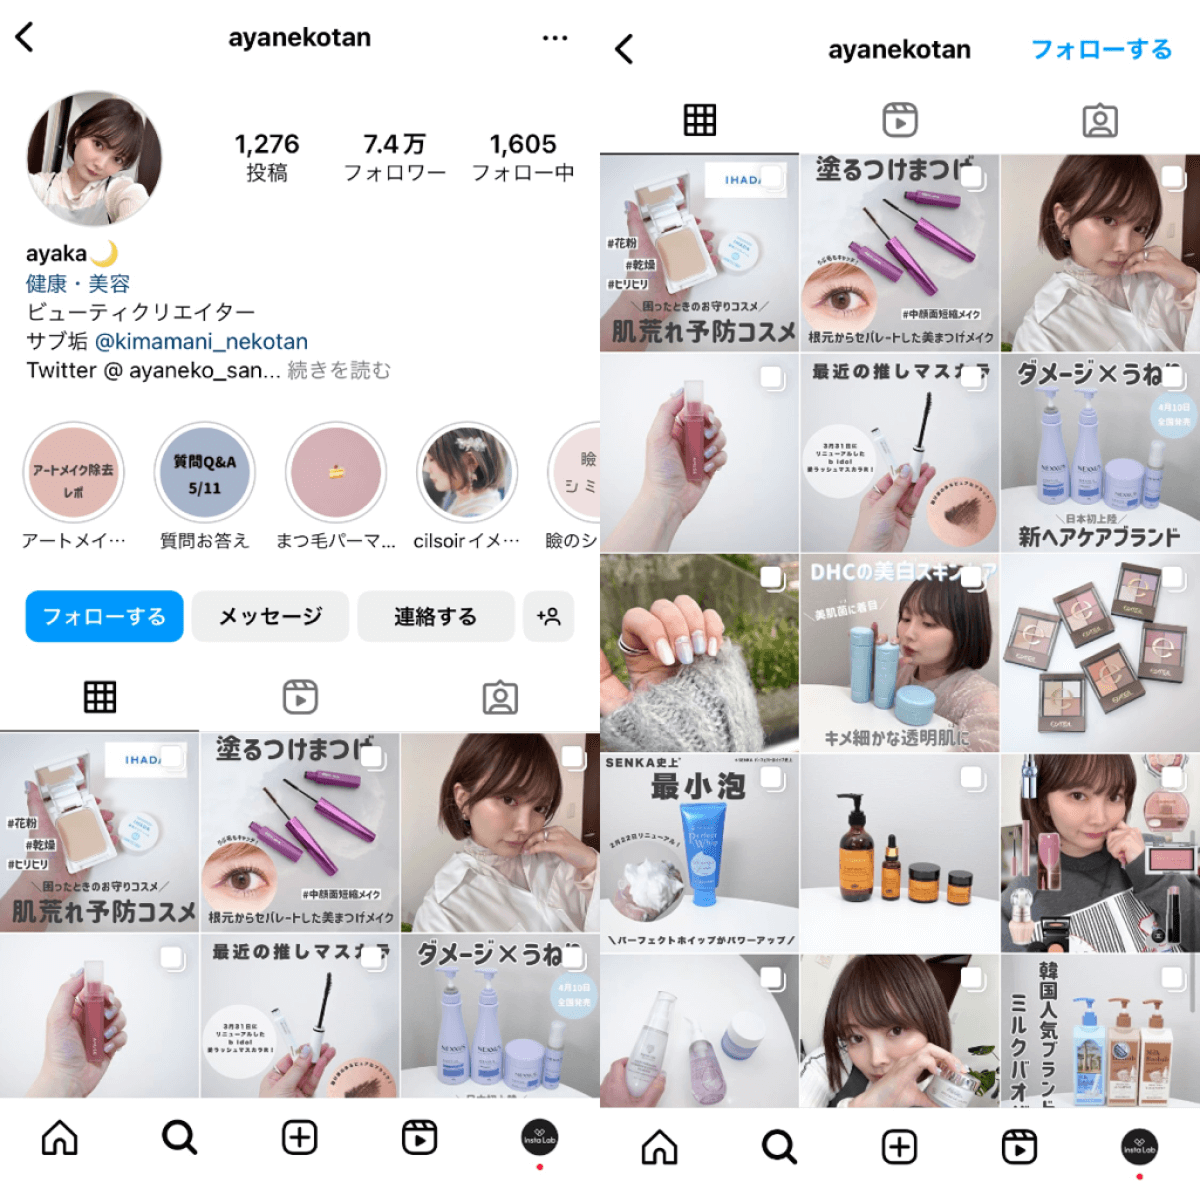 instagram-account-ayanekotan